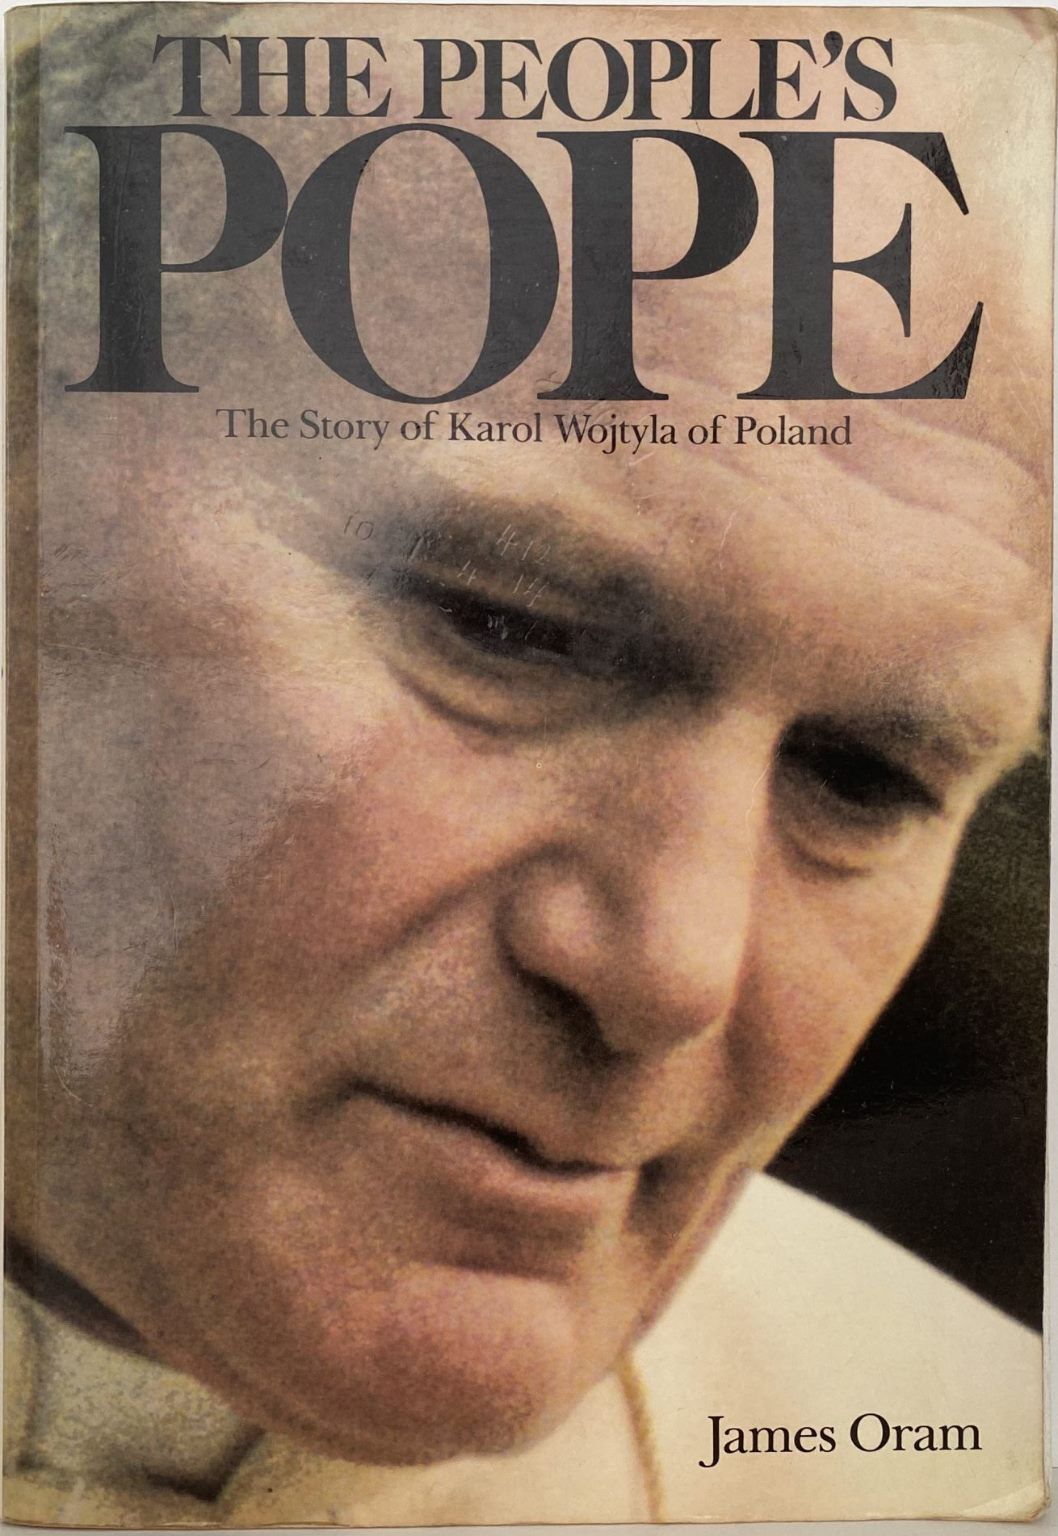 THE PEOPLE'S POPE: The Story of Karol Wojtyla of Poland